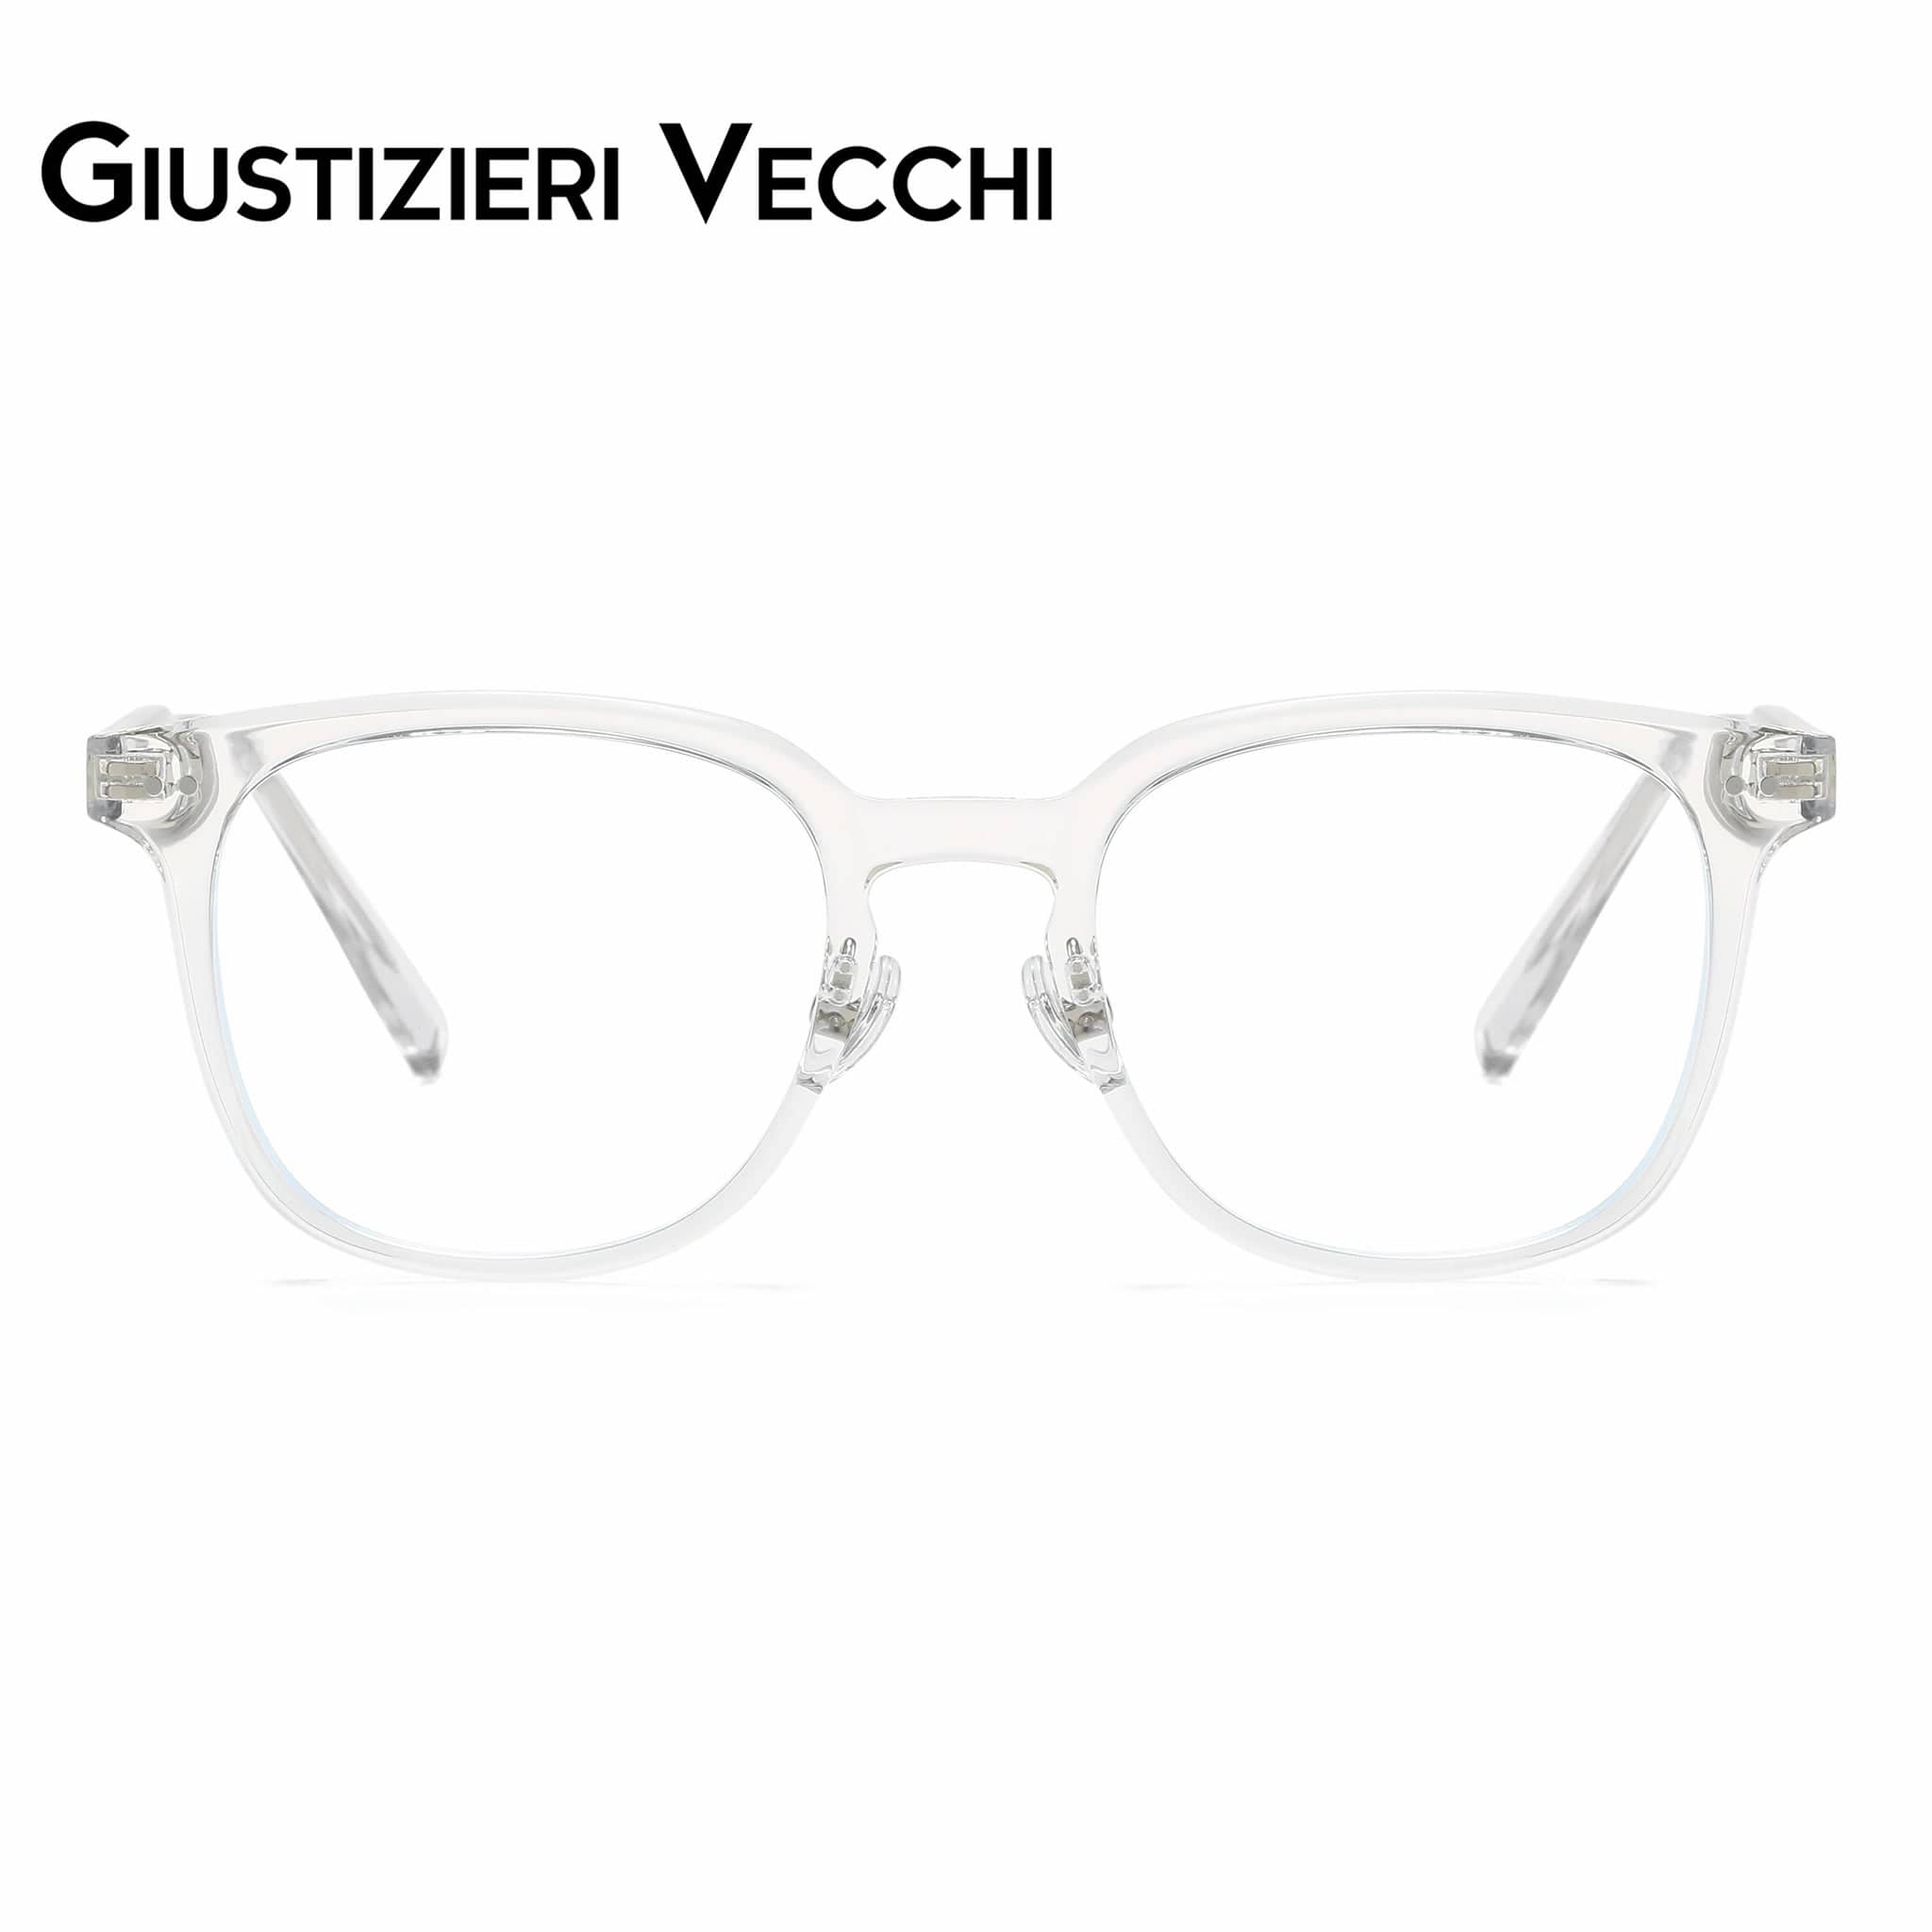 GIUSTIZIERI VECCHI Eyeglasses Medium / Clear Crystal RomaVista Uno